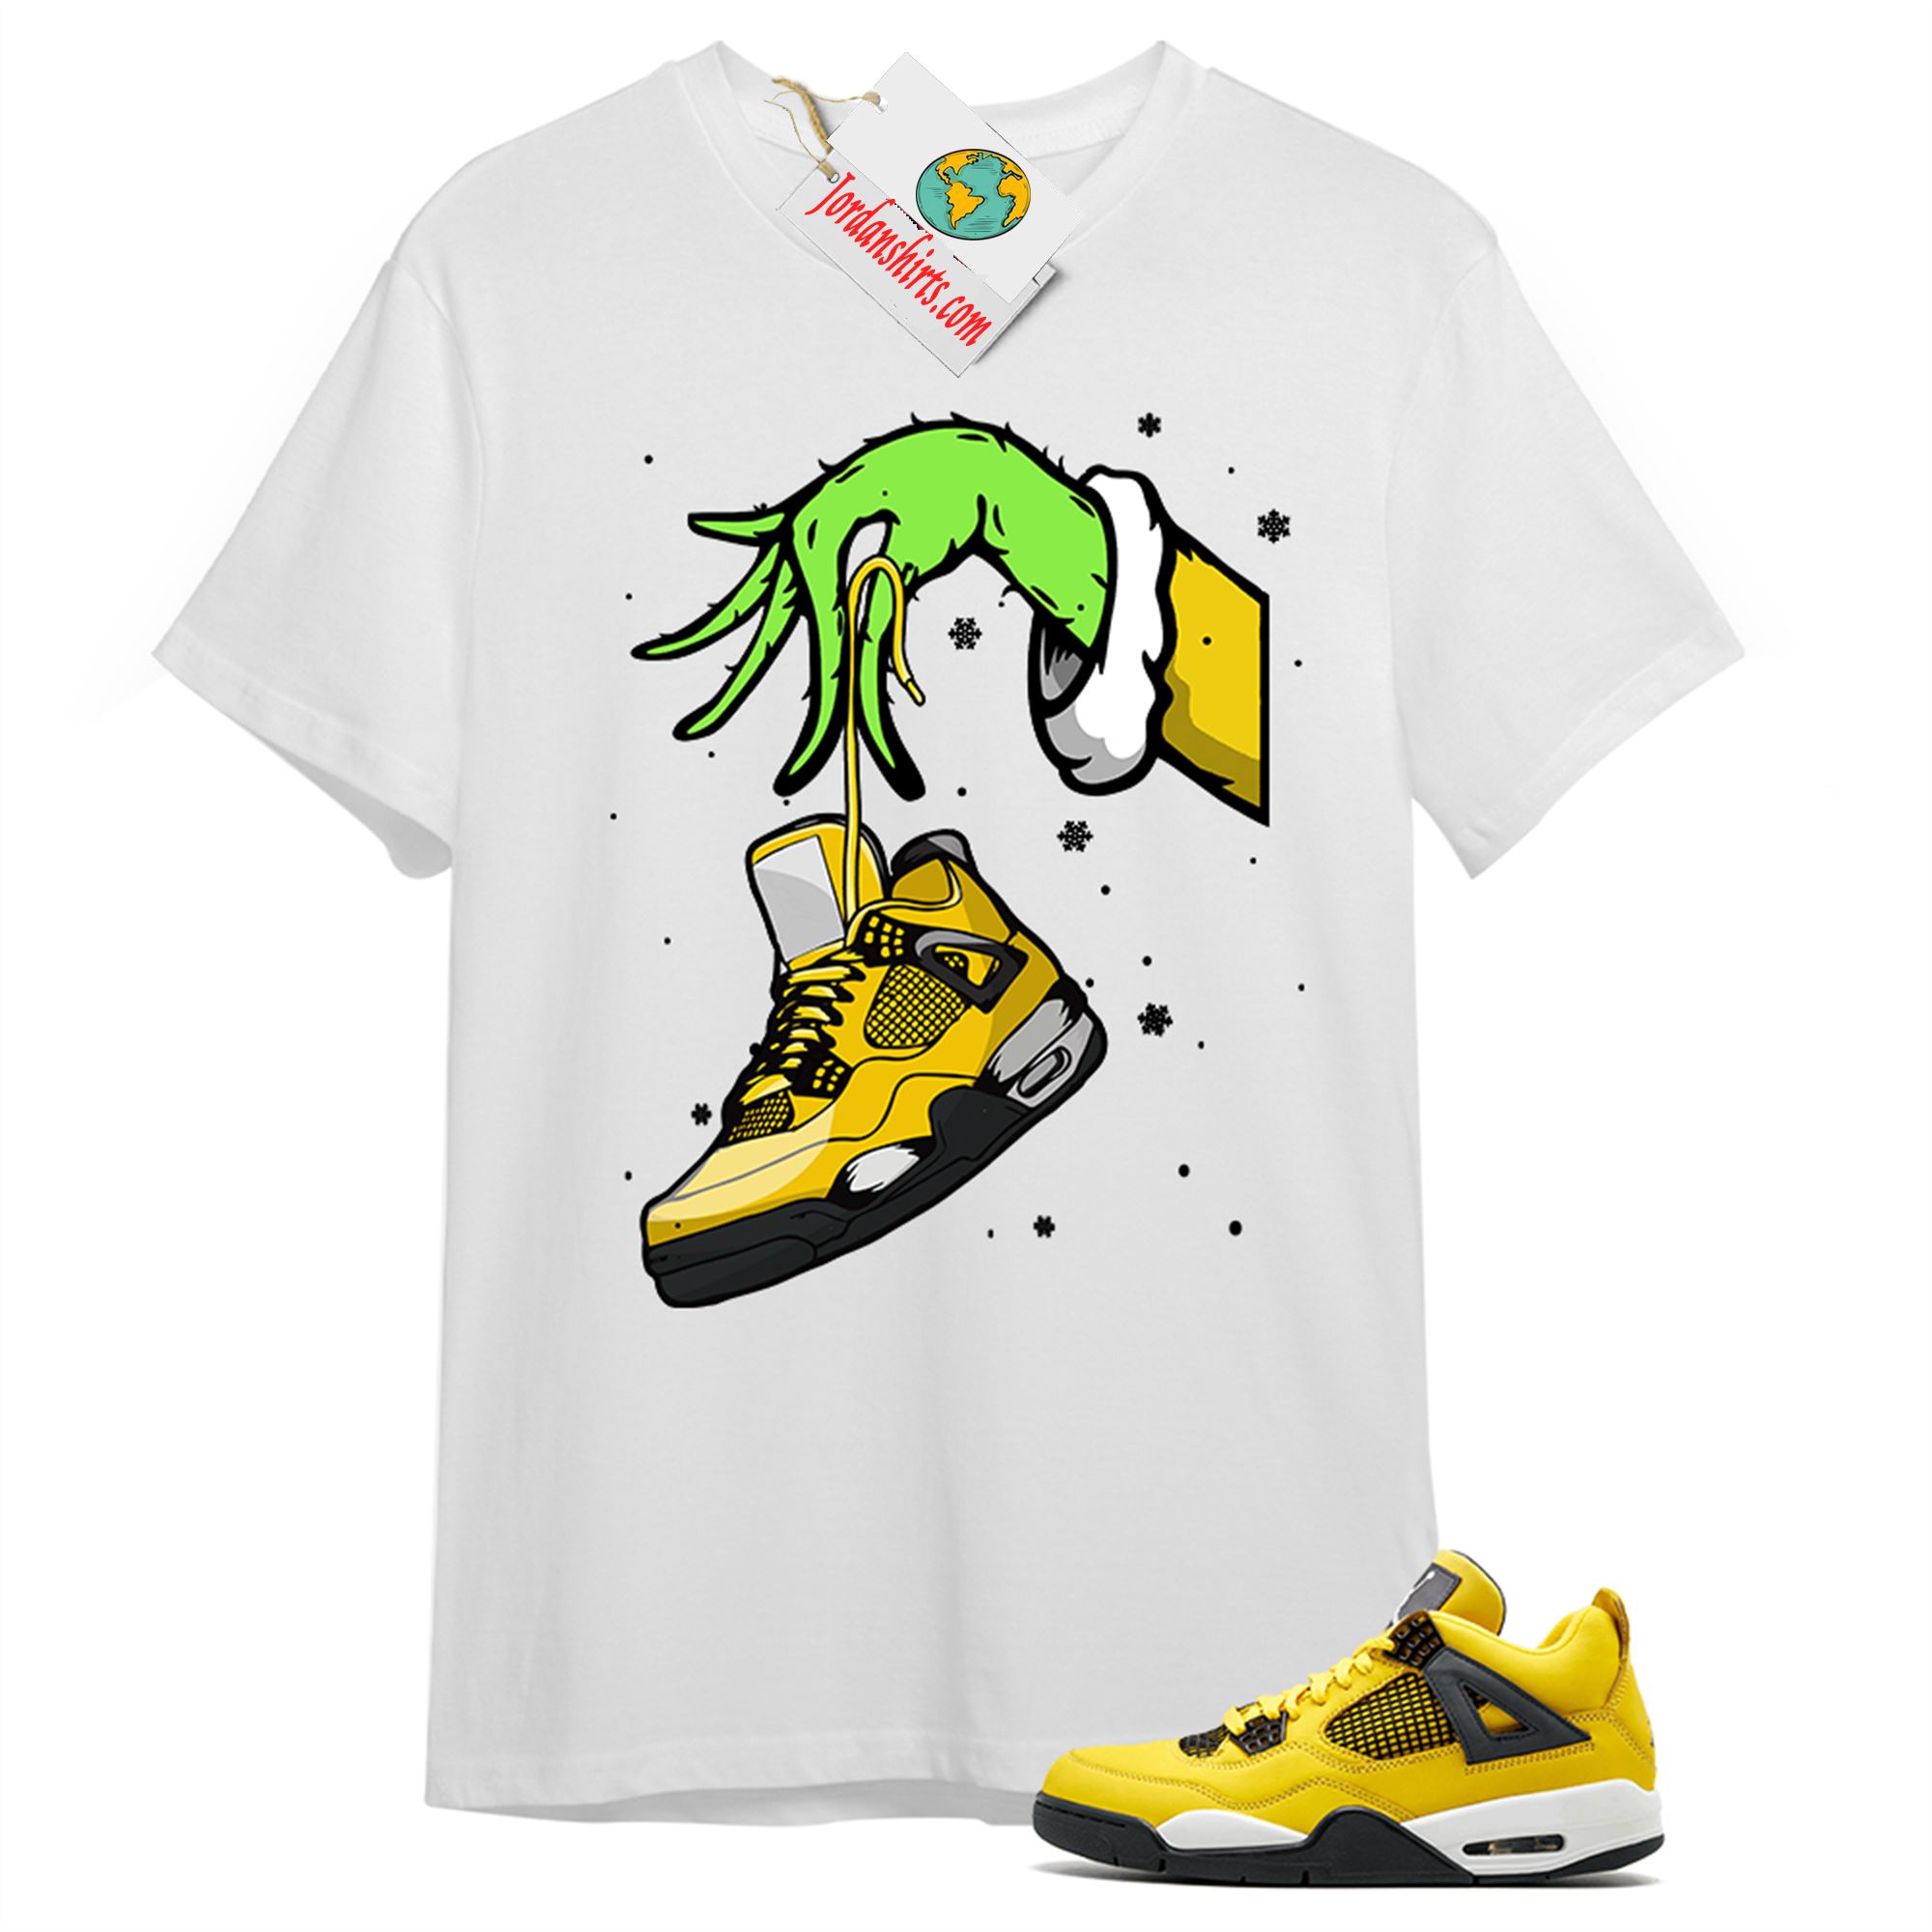 Jordan 4 Shirt, Grinch Hand White T-shirt Air Jordan 4 Tour Yellow Lightning 4s Plus Size Up To 5xl